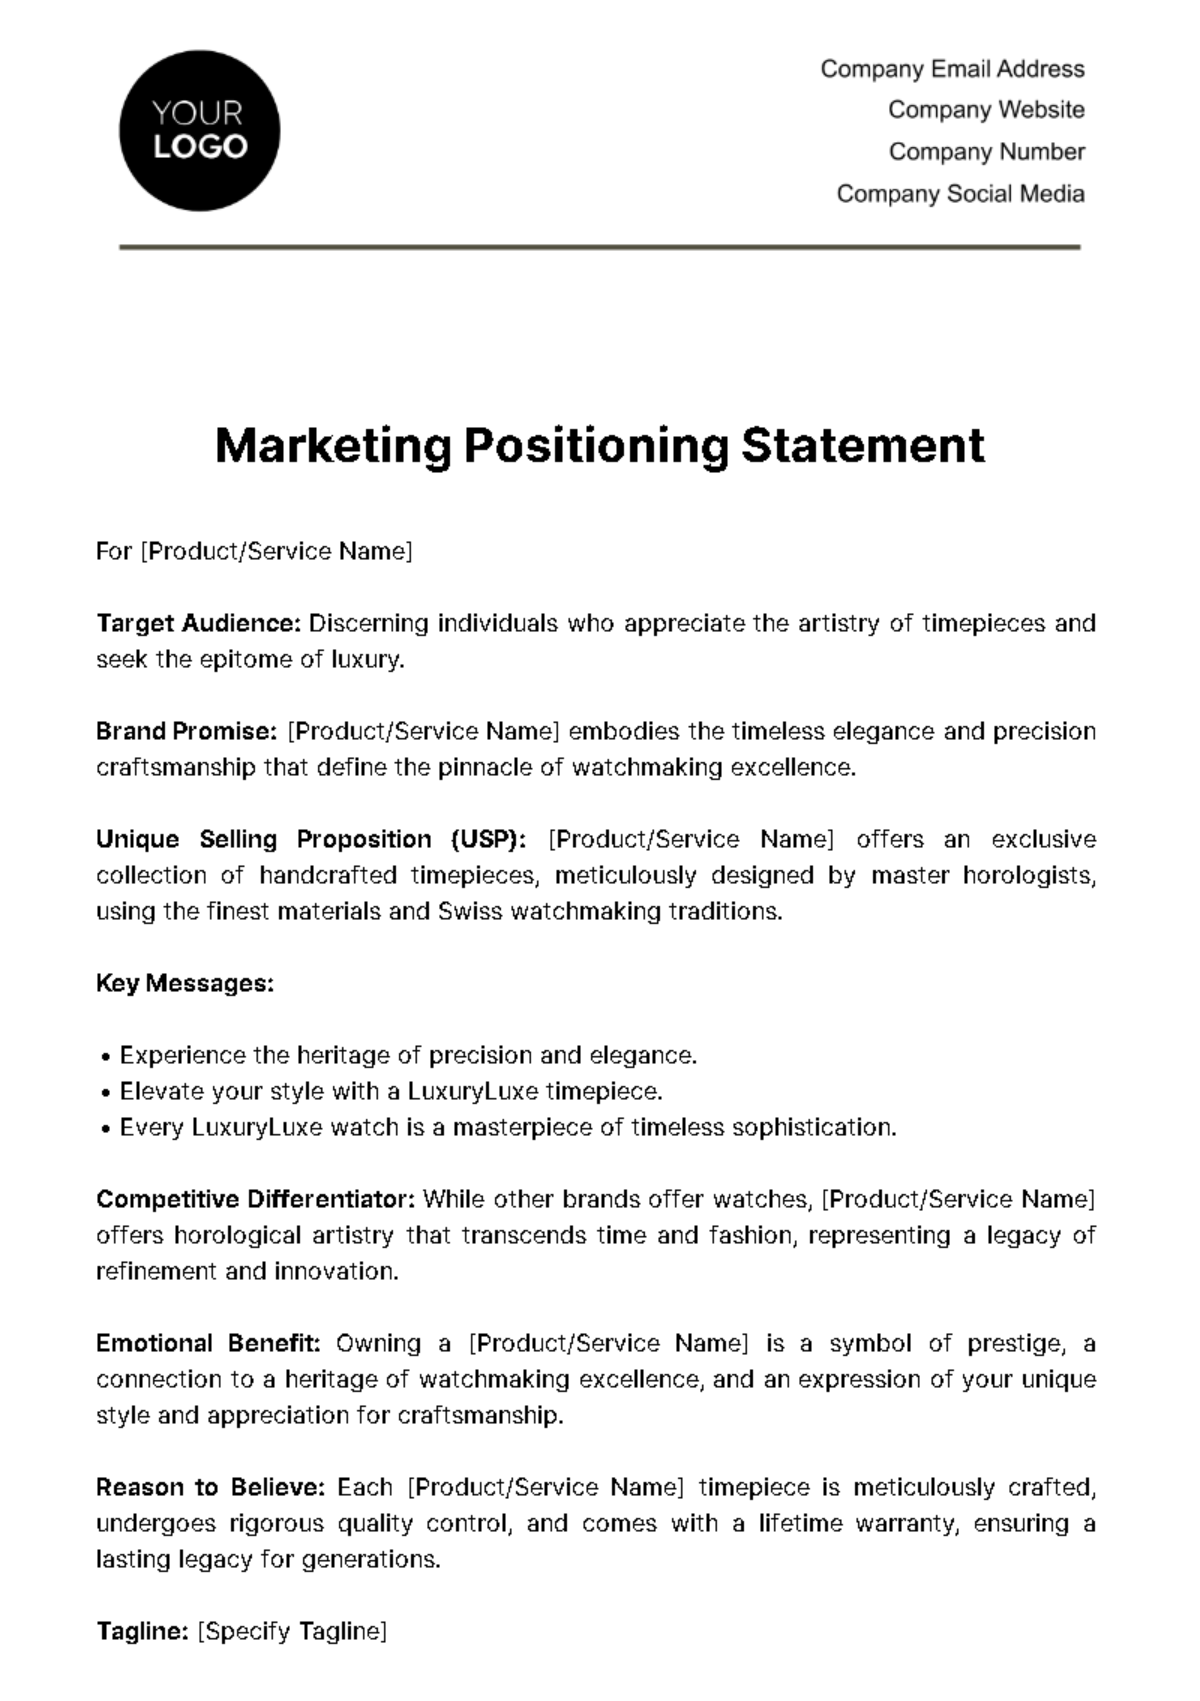 Marketing Positioning Statement Template